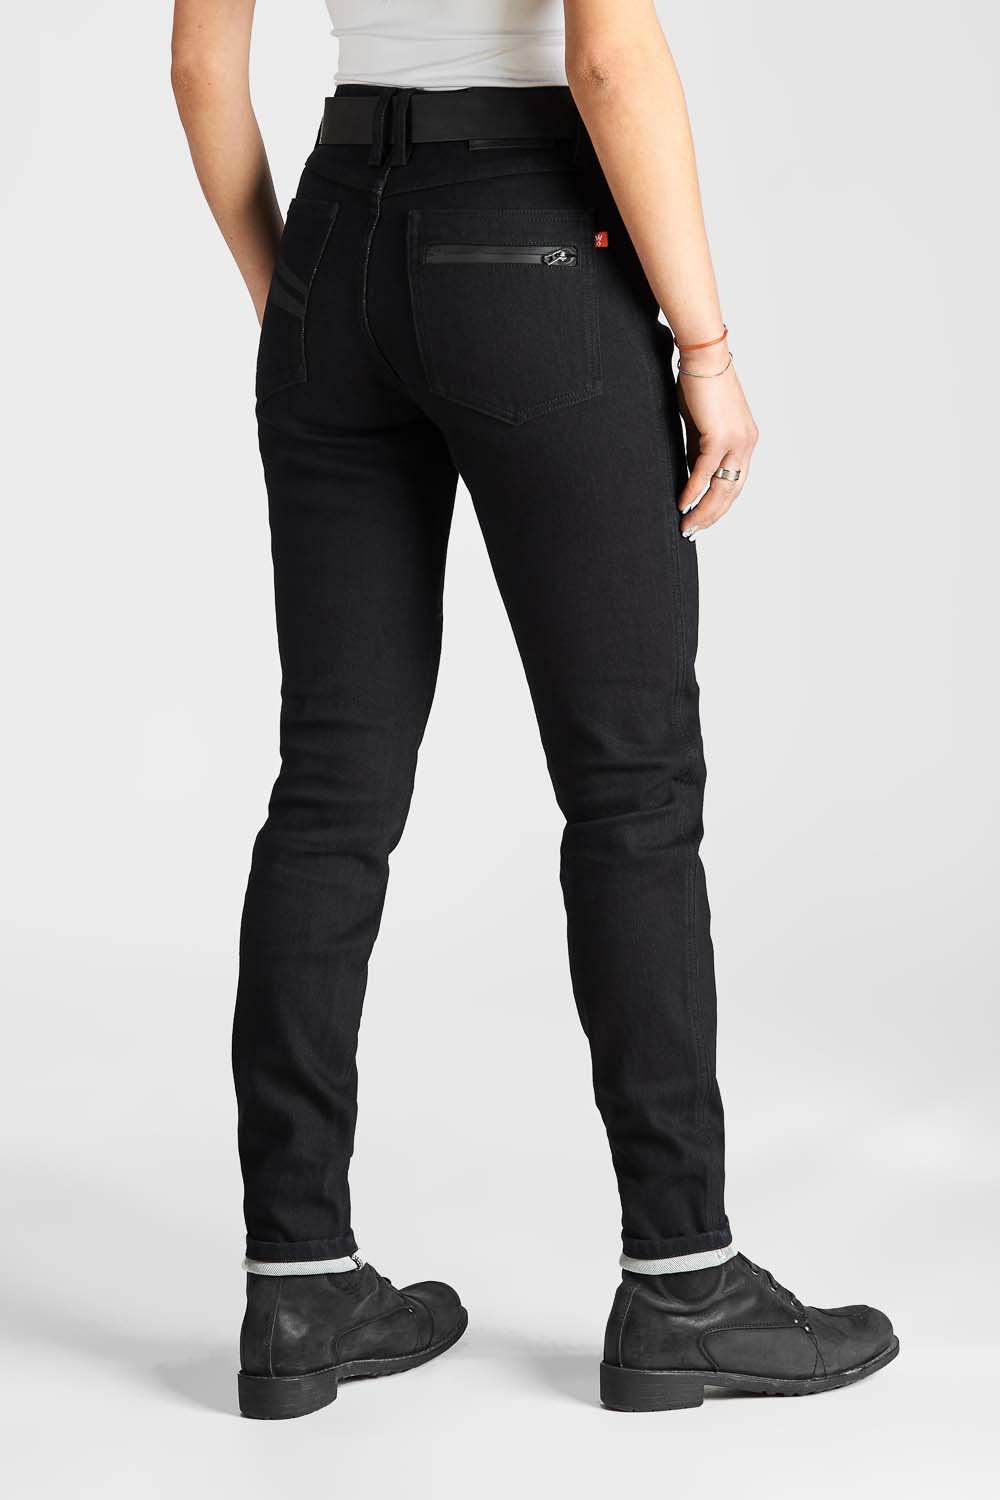 KISSAKI BLACK – Women’s Motorcycle Jeans Slim-Fit Dyneema® 2